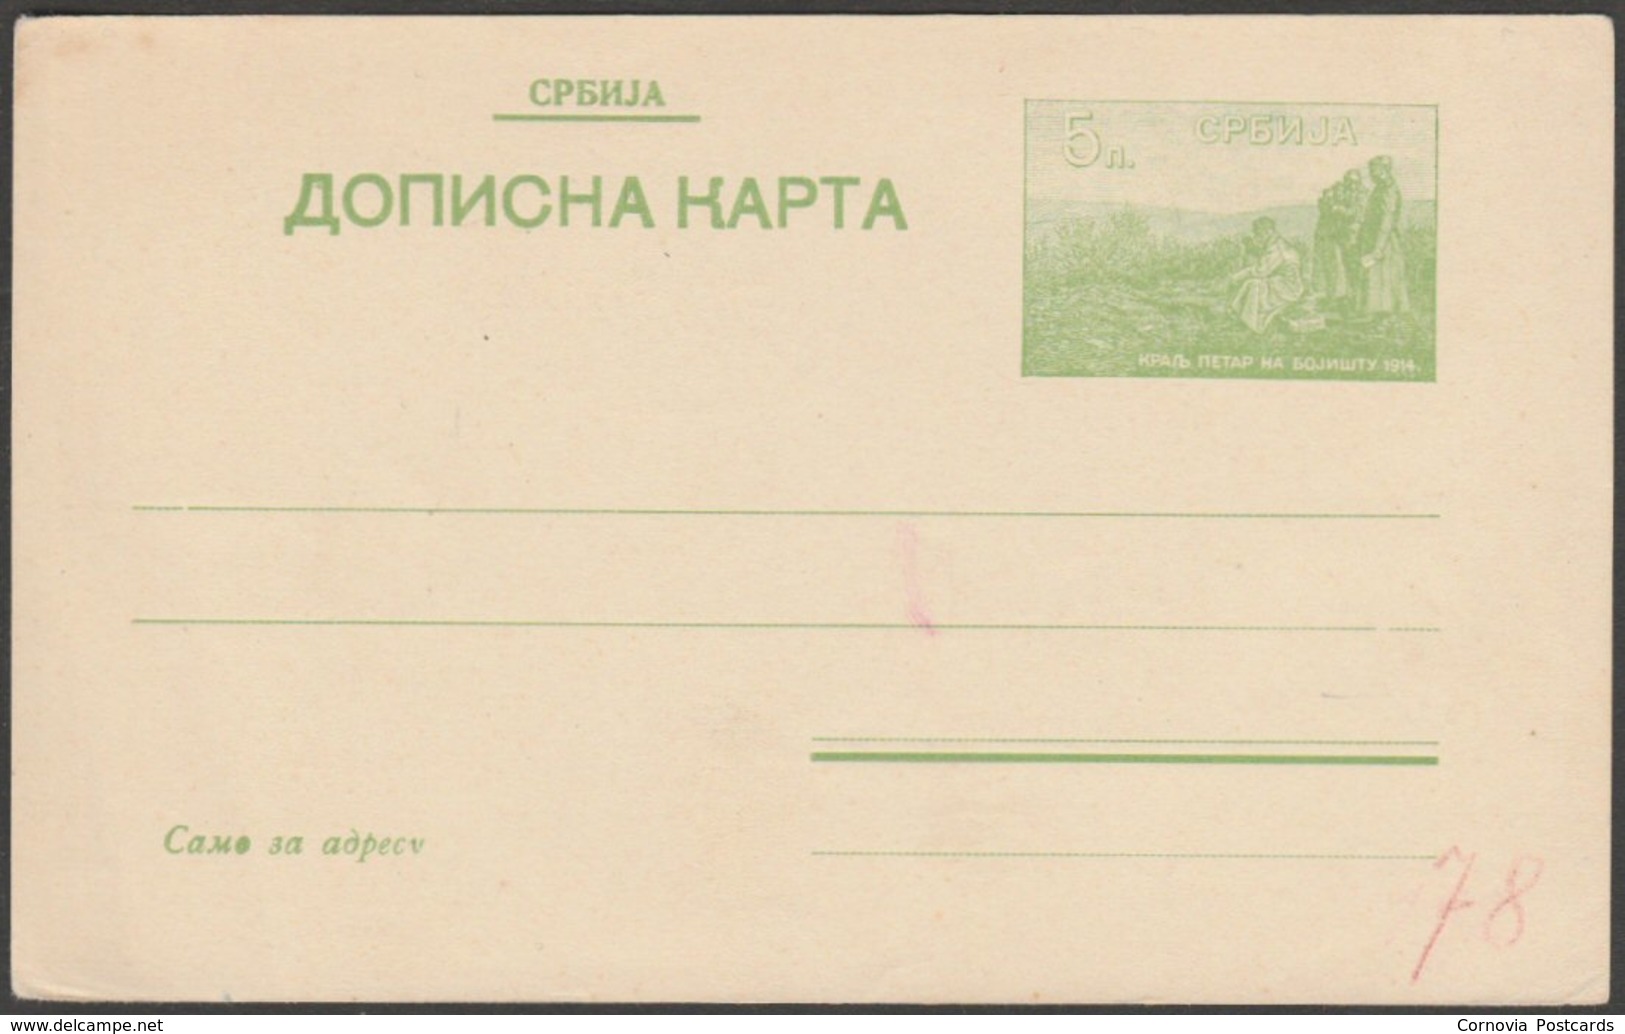 Србија Дописна Карта 5 Пара - Serbia Green 5 Para Postal Stationery, 1915 - Serbia